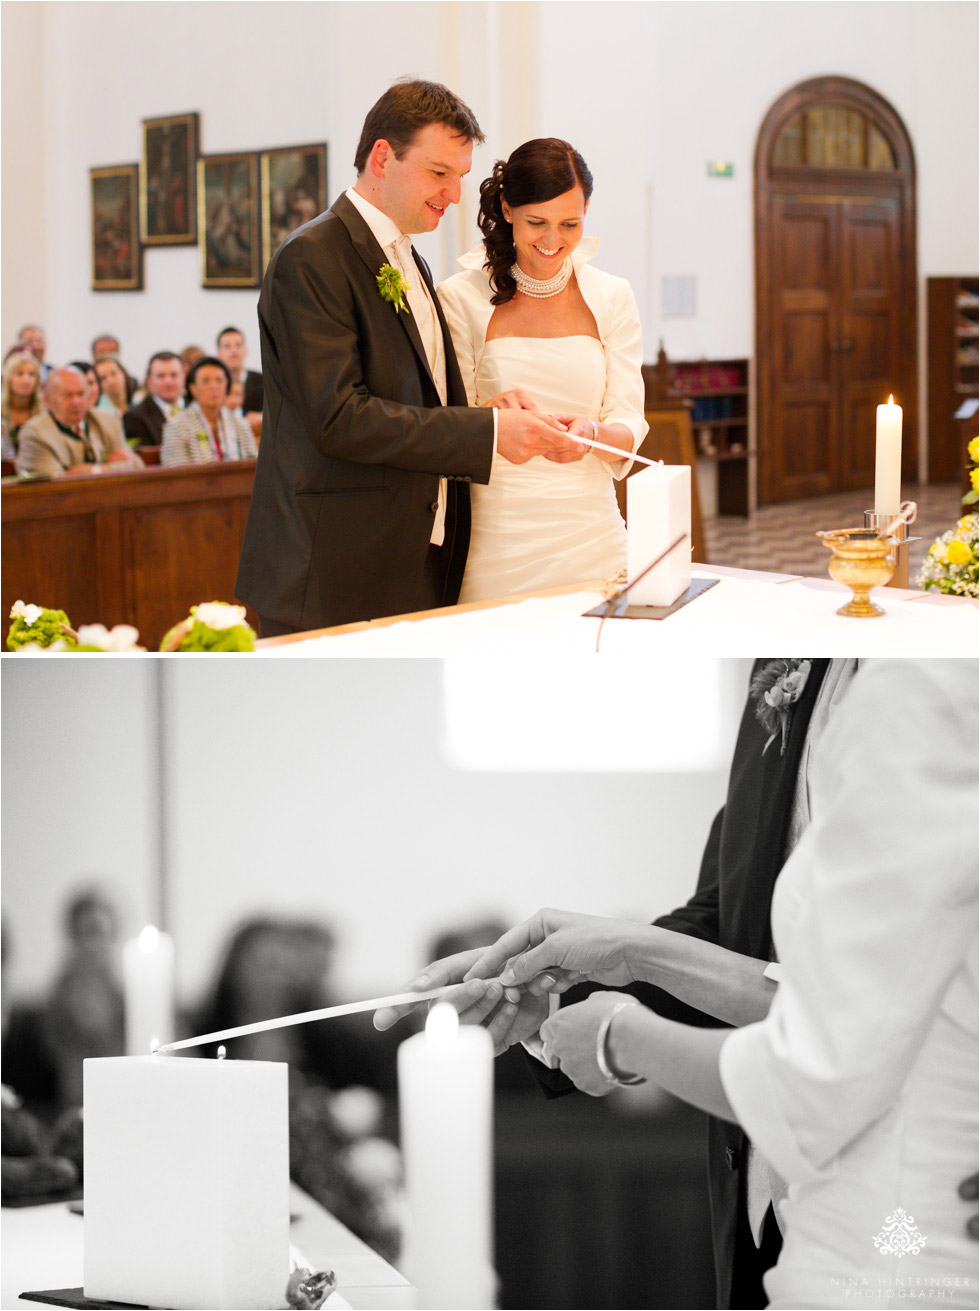 Traunsee wedding with Barbara & Wolfgang | Spitzvilla, Upper Austria - Blog of Nina Hintringer Photography - Wedding Photography, Wedding Reportage and Destination Weddings